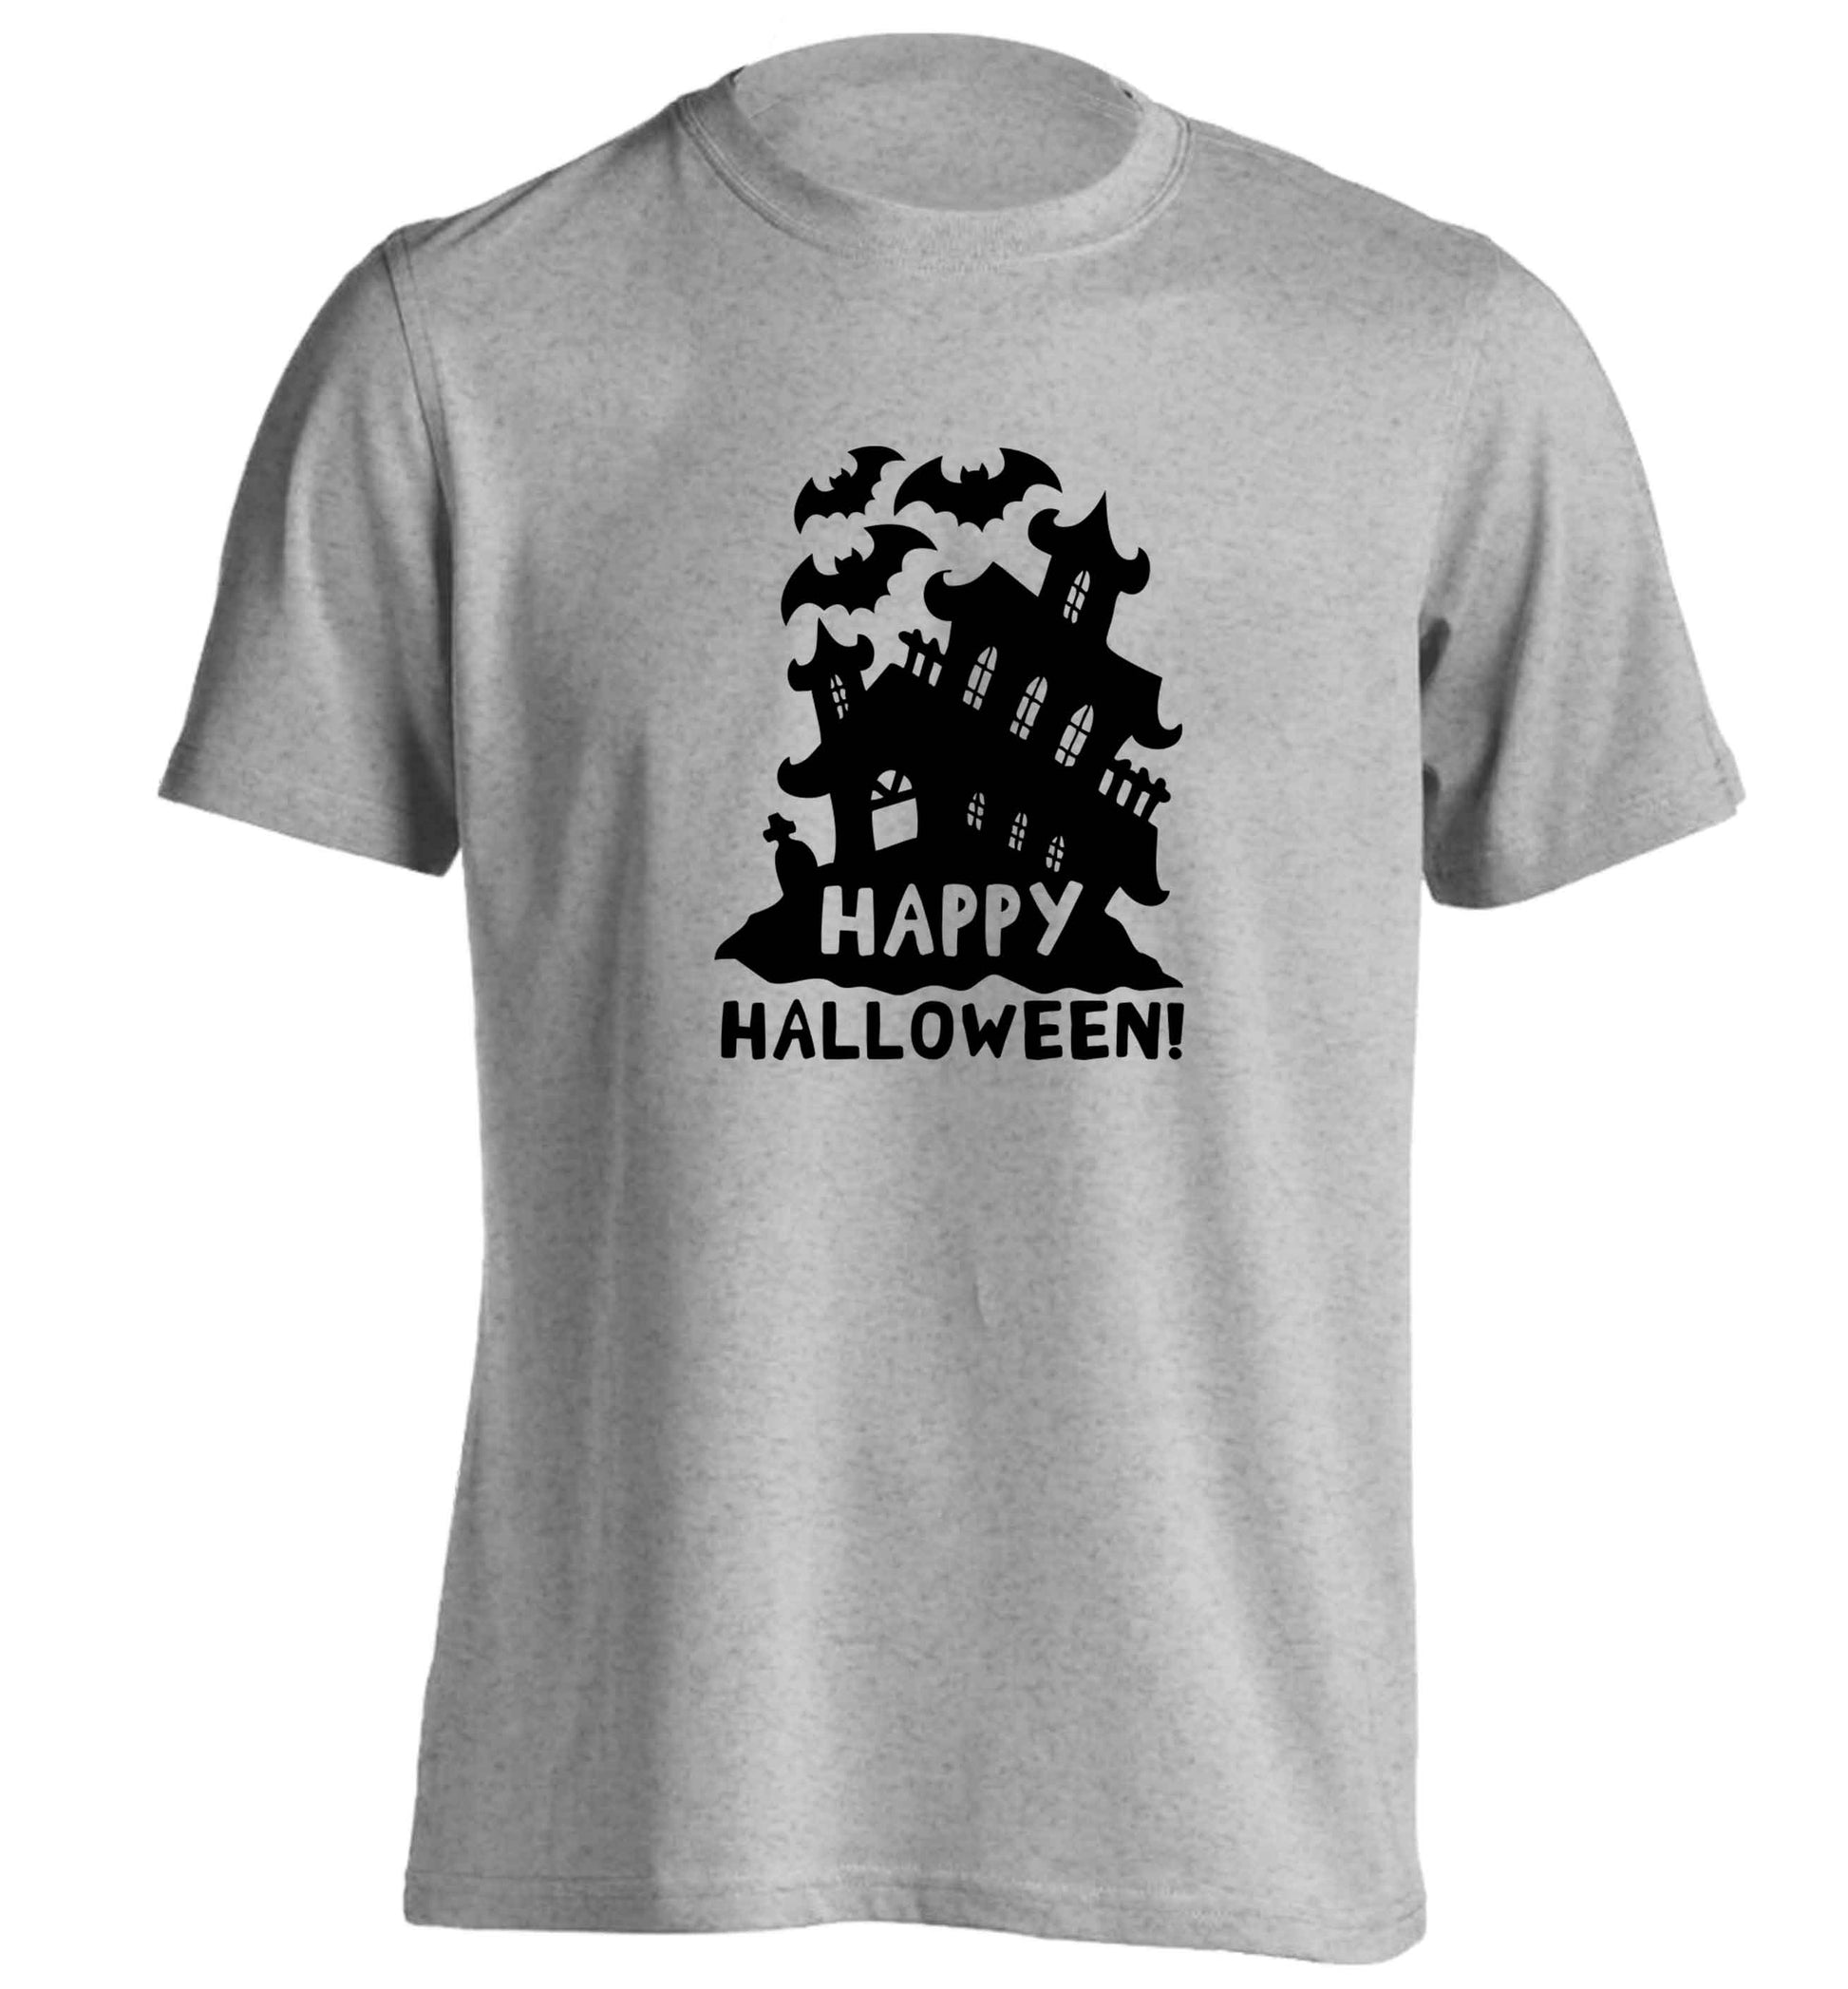 Happy halloween - haunted house adults unisex grey Tshirt 2XL